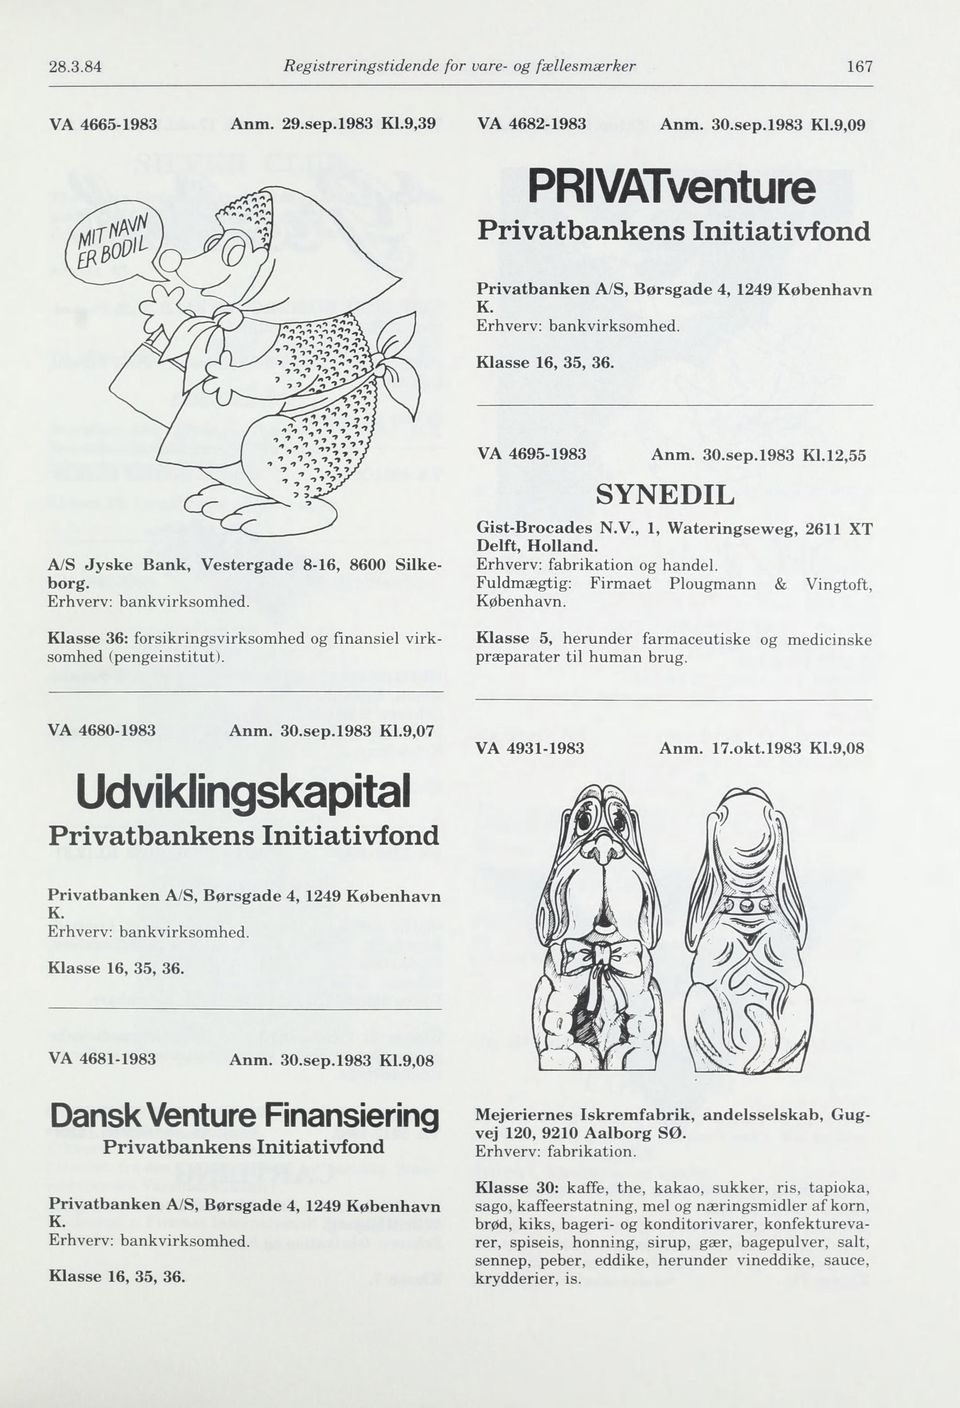 VA 4695-1983 Anm. 30.sep.1983 Kl.12,55 SYNEDIL Gist-Brocades N.V., 1, Wateringseweg, 2611 XT Delft, Holland.